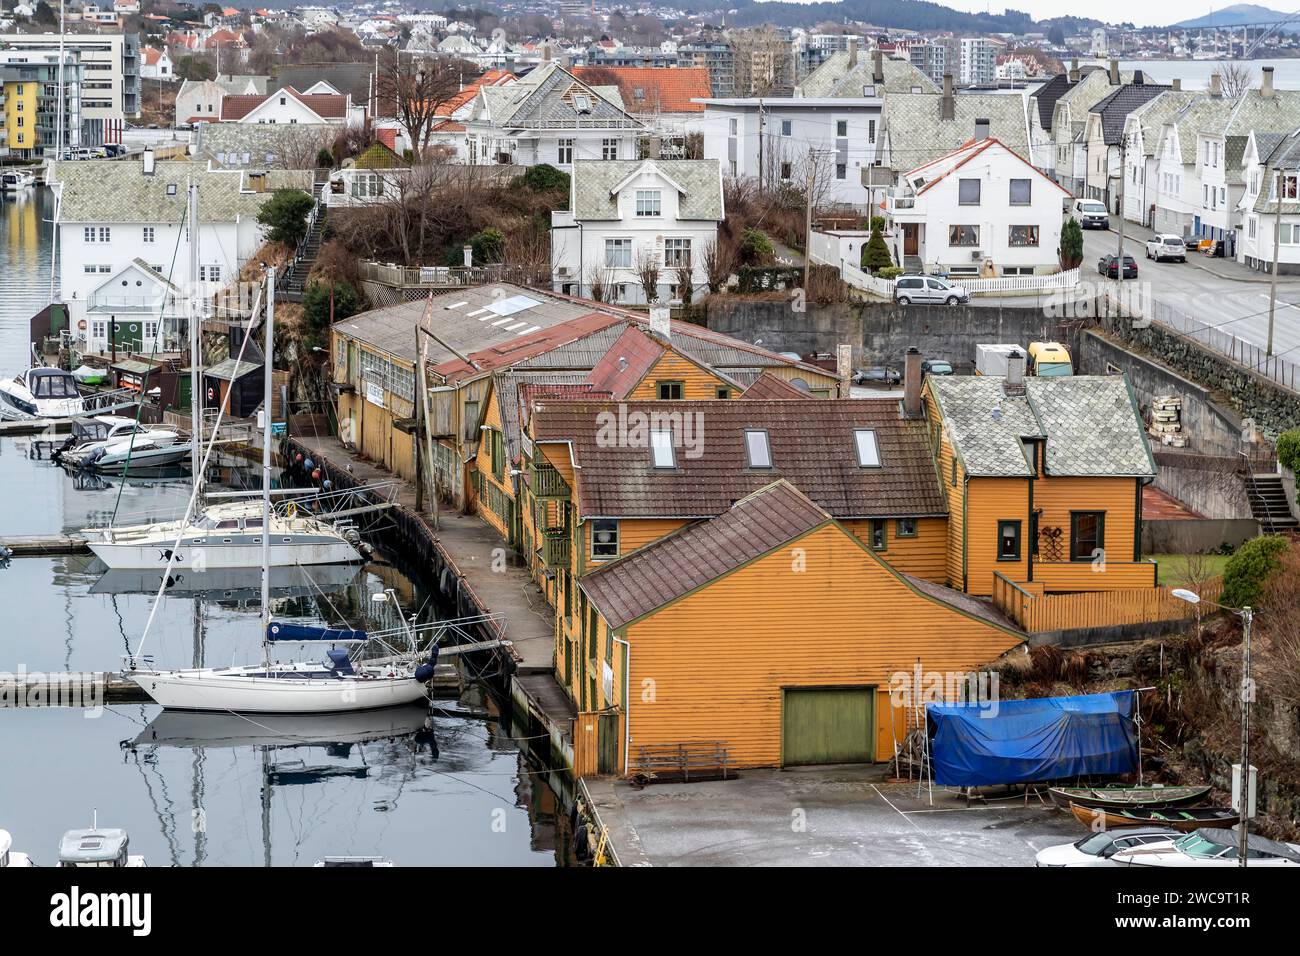 High viewpoint from Risøy broen (bridge) looking at the waterway and buildings.  Haugesund, Norway Stock Photo